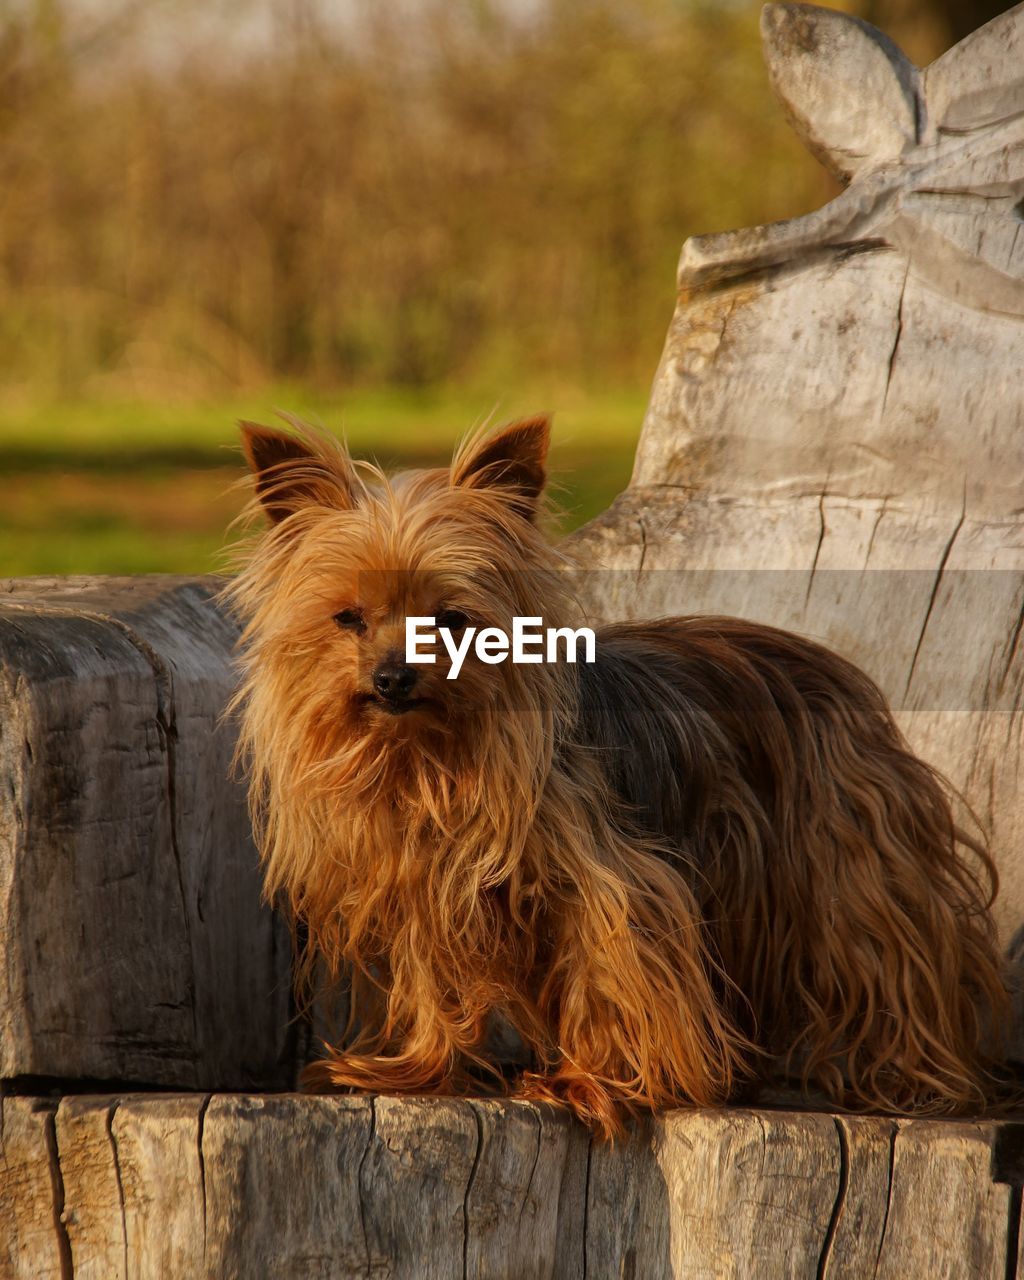 Portrait of a dog on wood